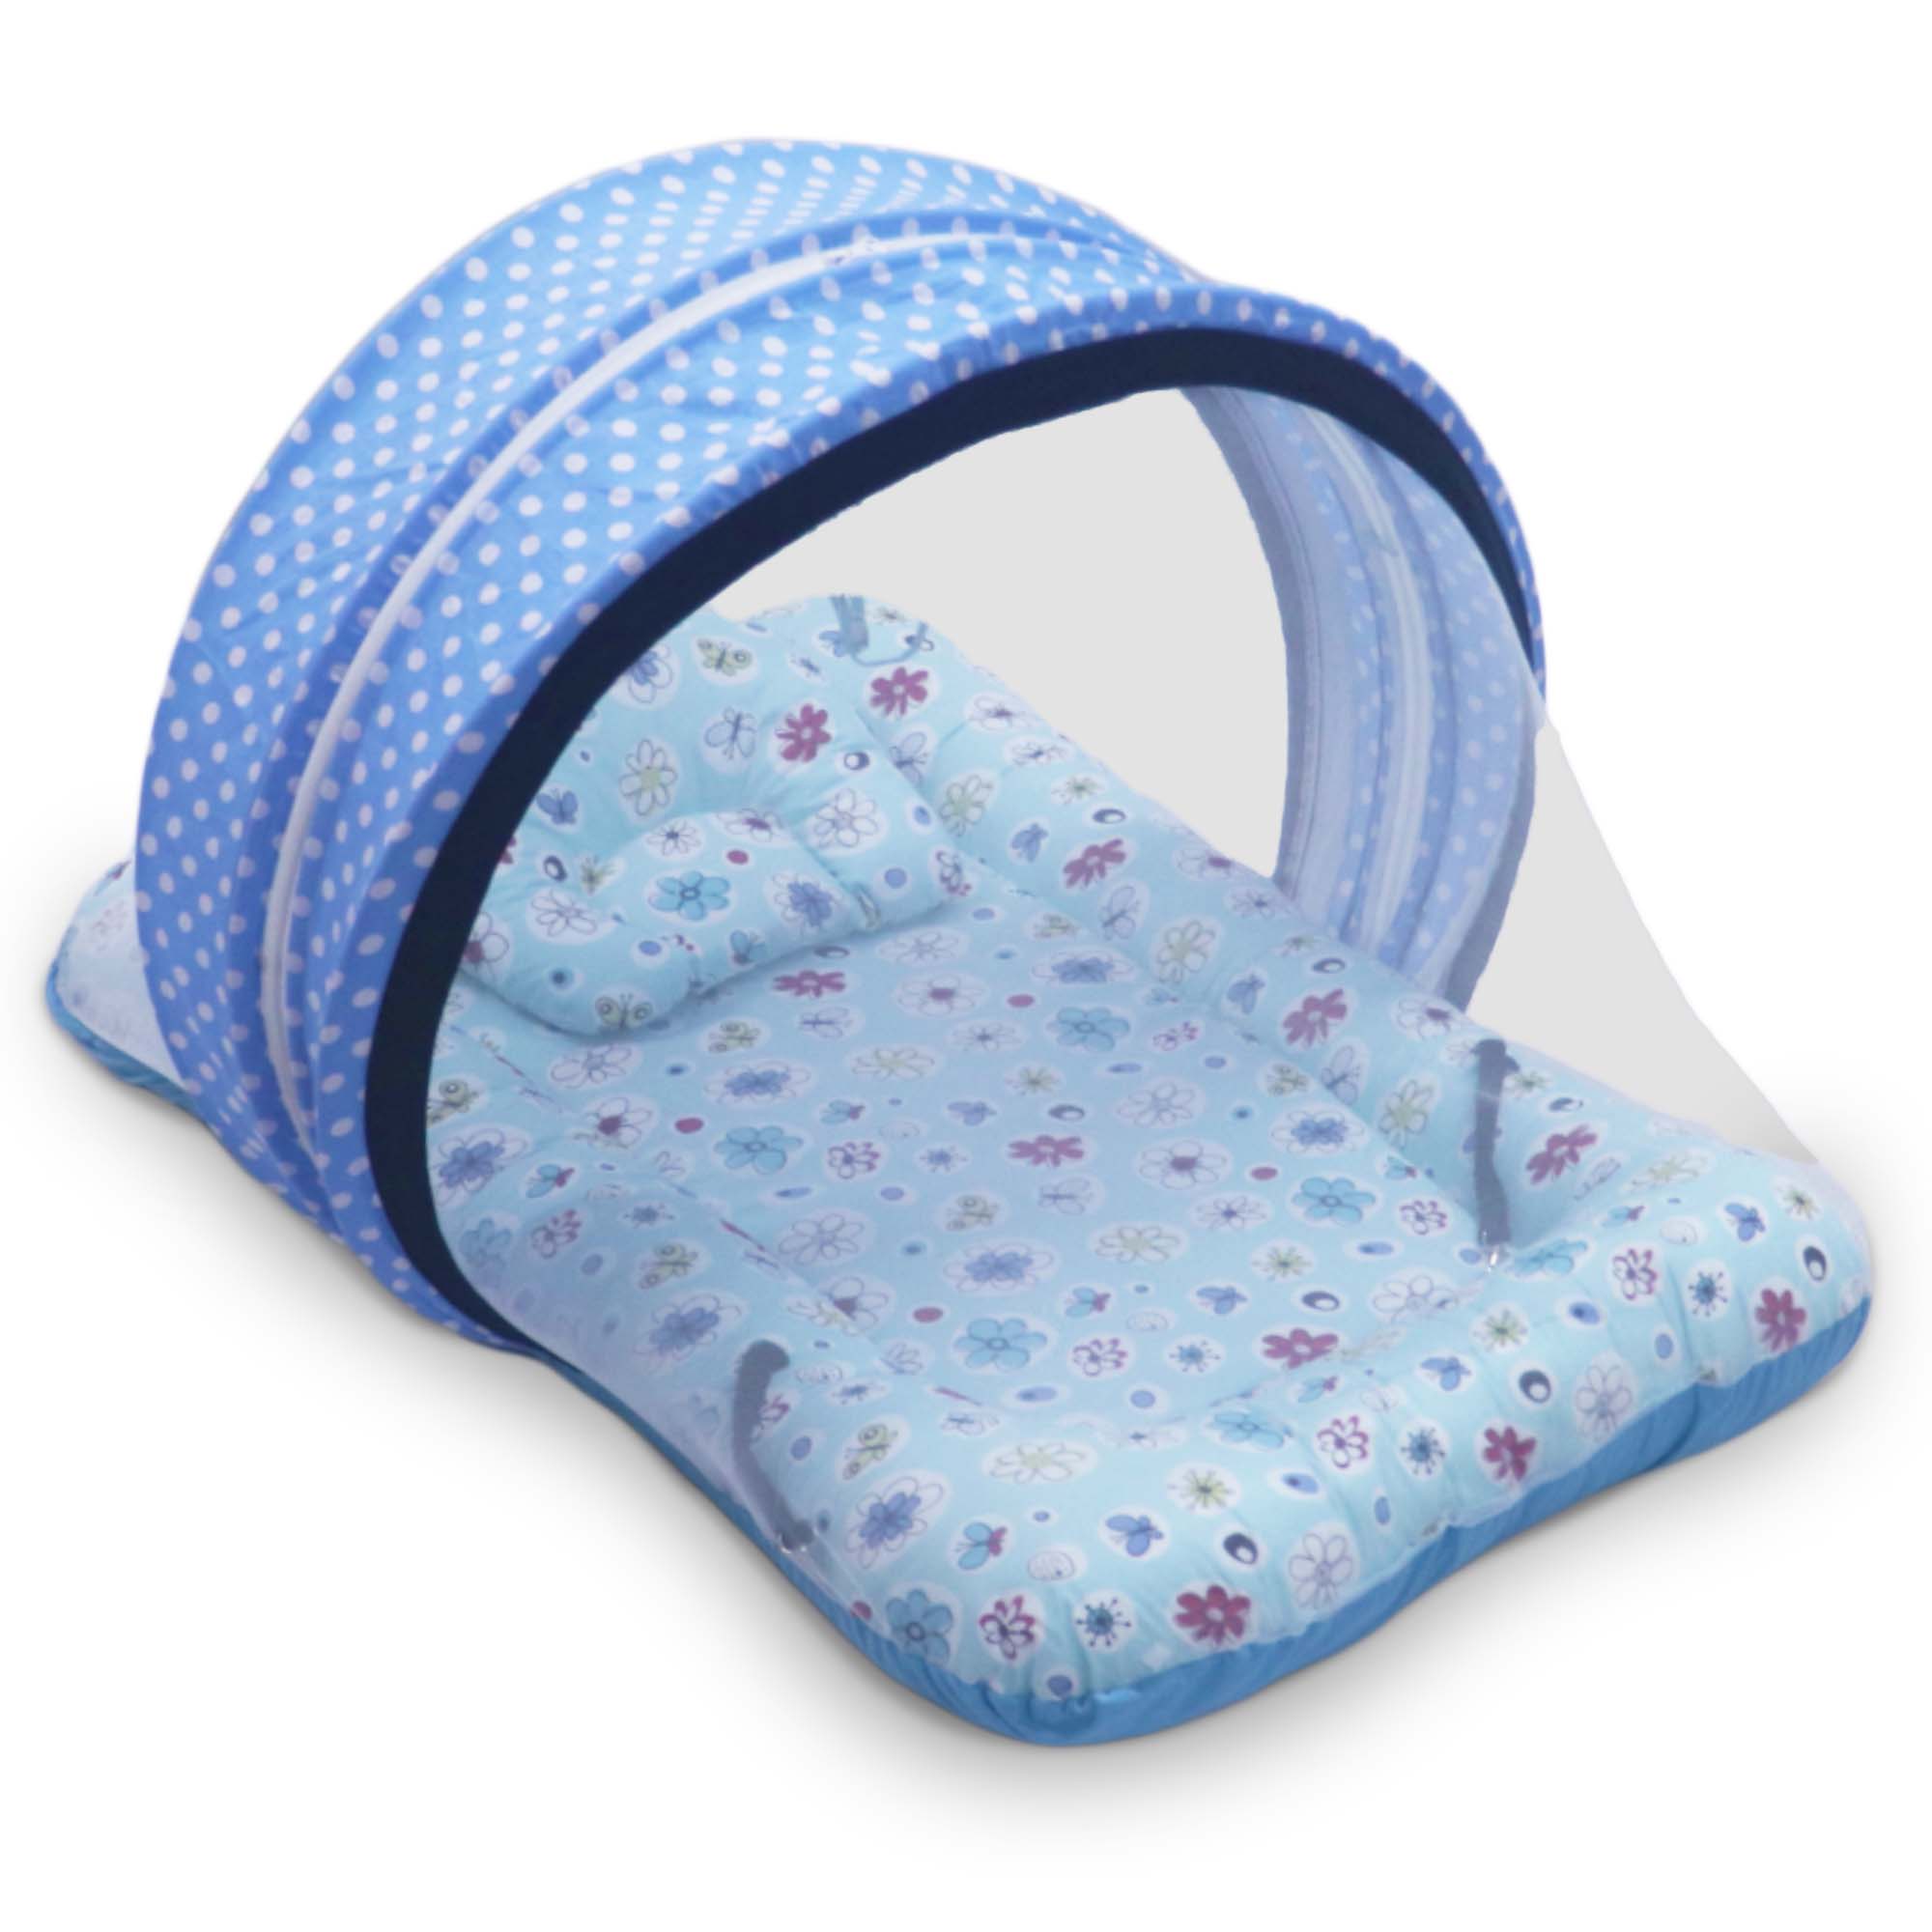 Floral Butterfly -  Kradyl Kroft Bassinet Style Mosquito Net Bedding for Infants